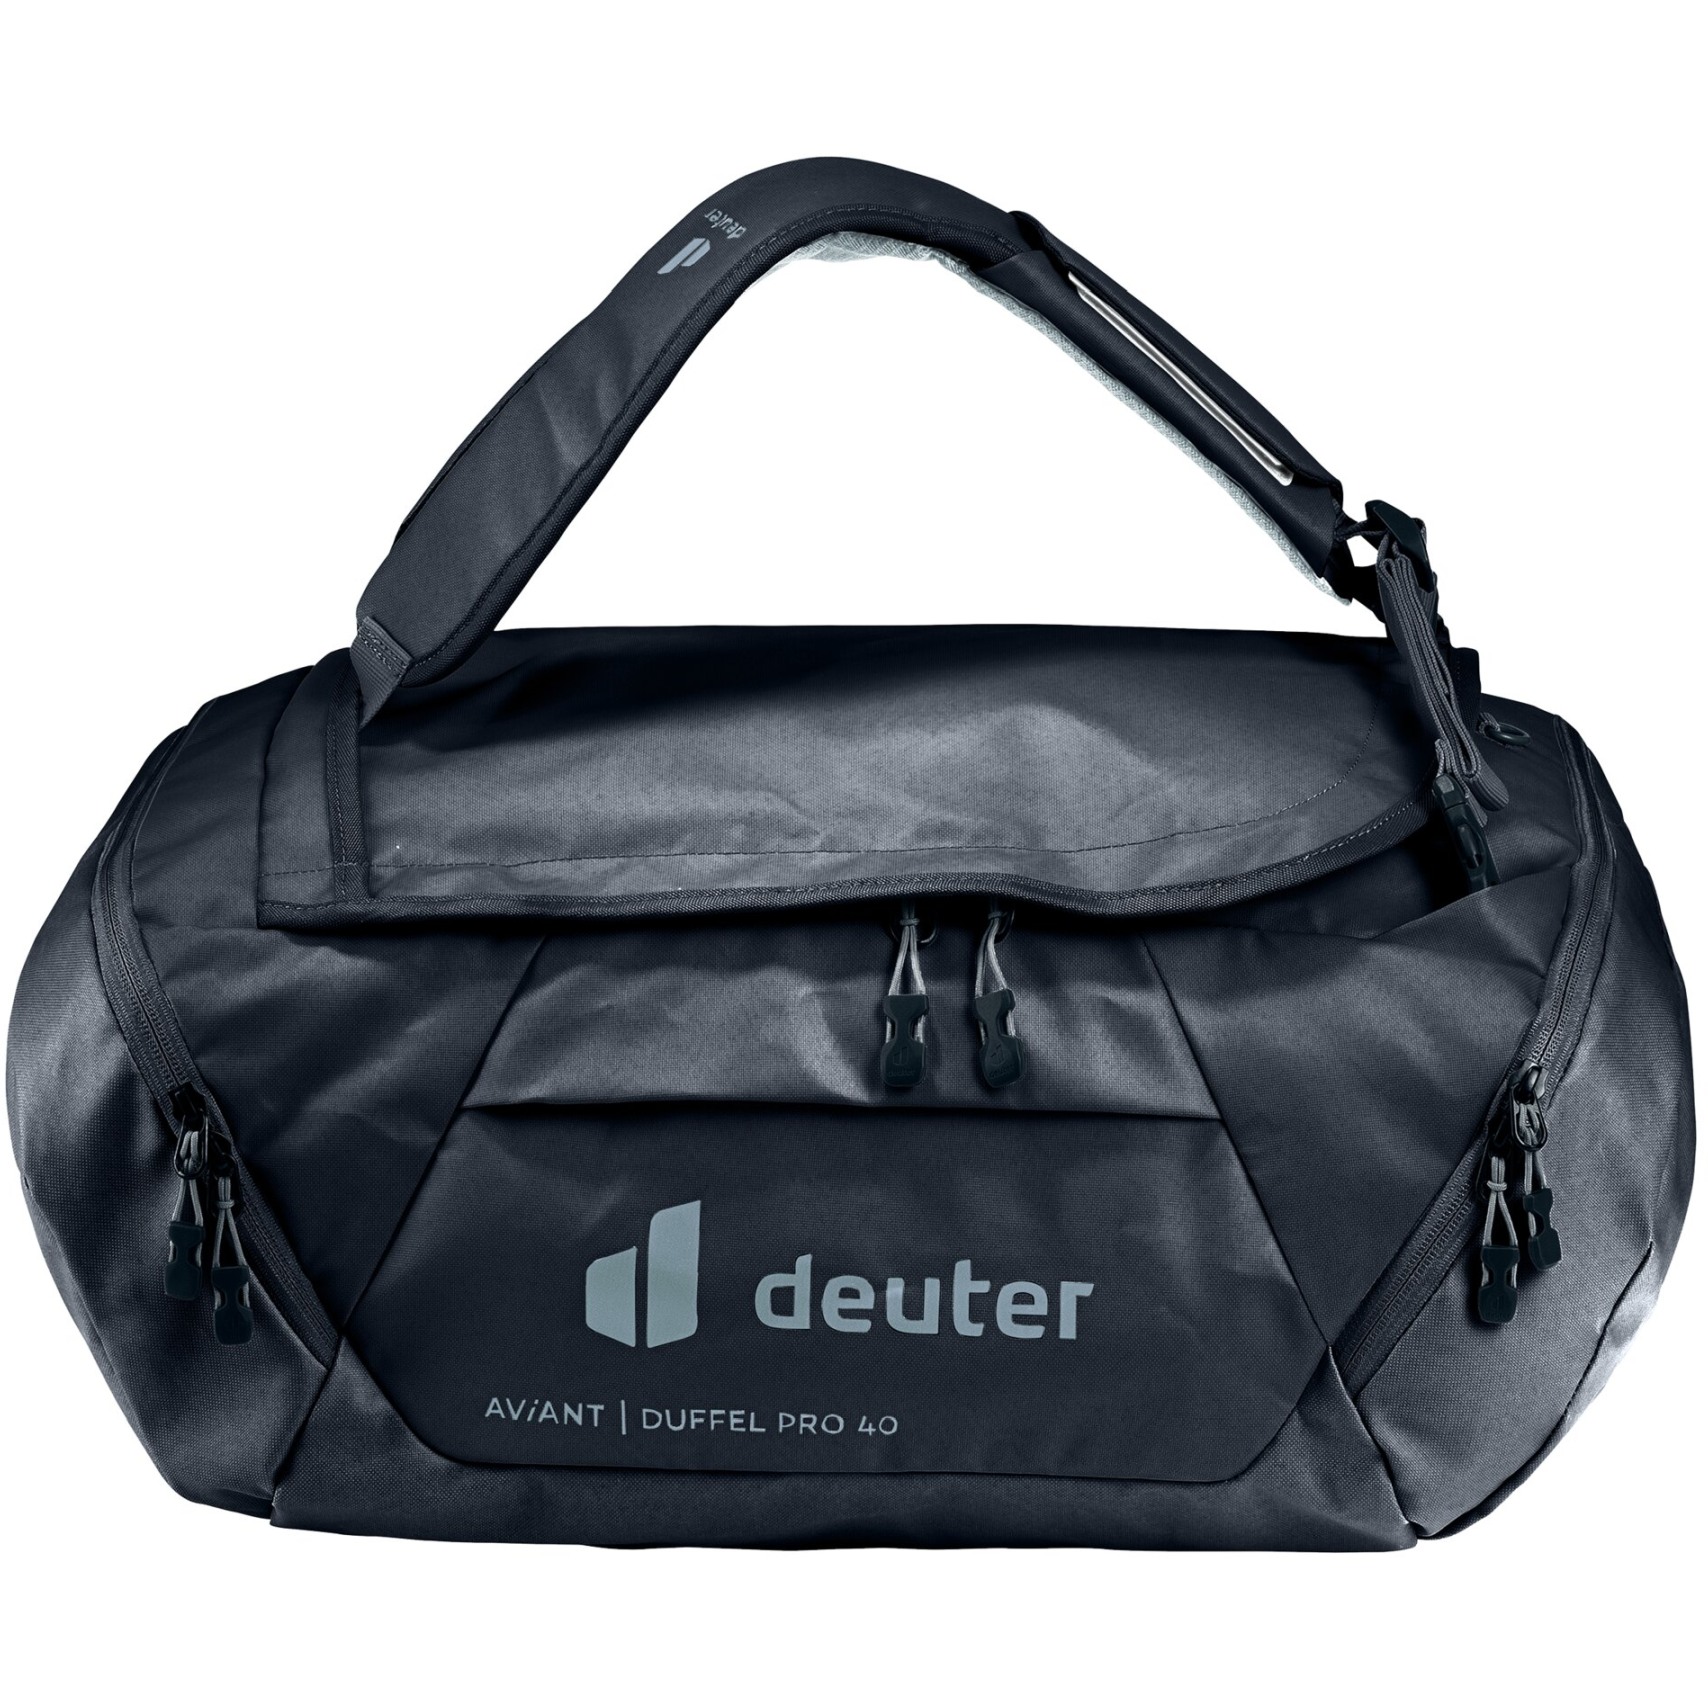 Deuter - Pro BIKE24 AViANT Reisetasche | schwarz Duffel 40